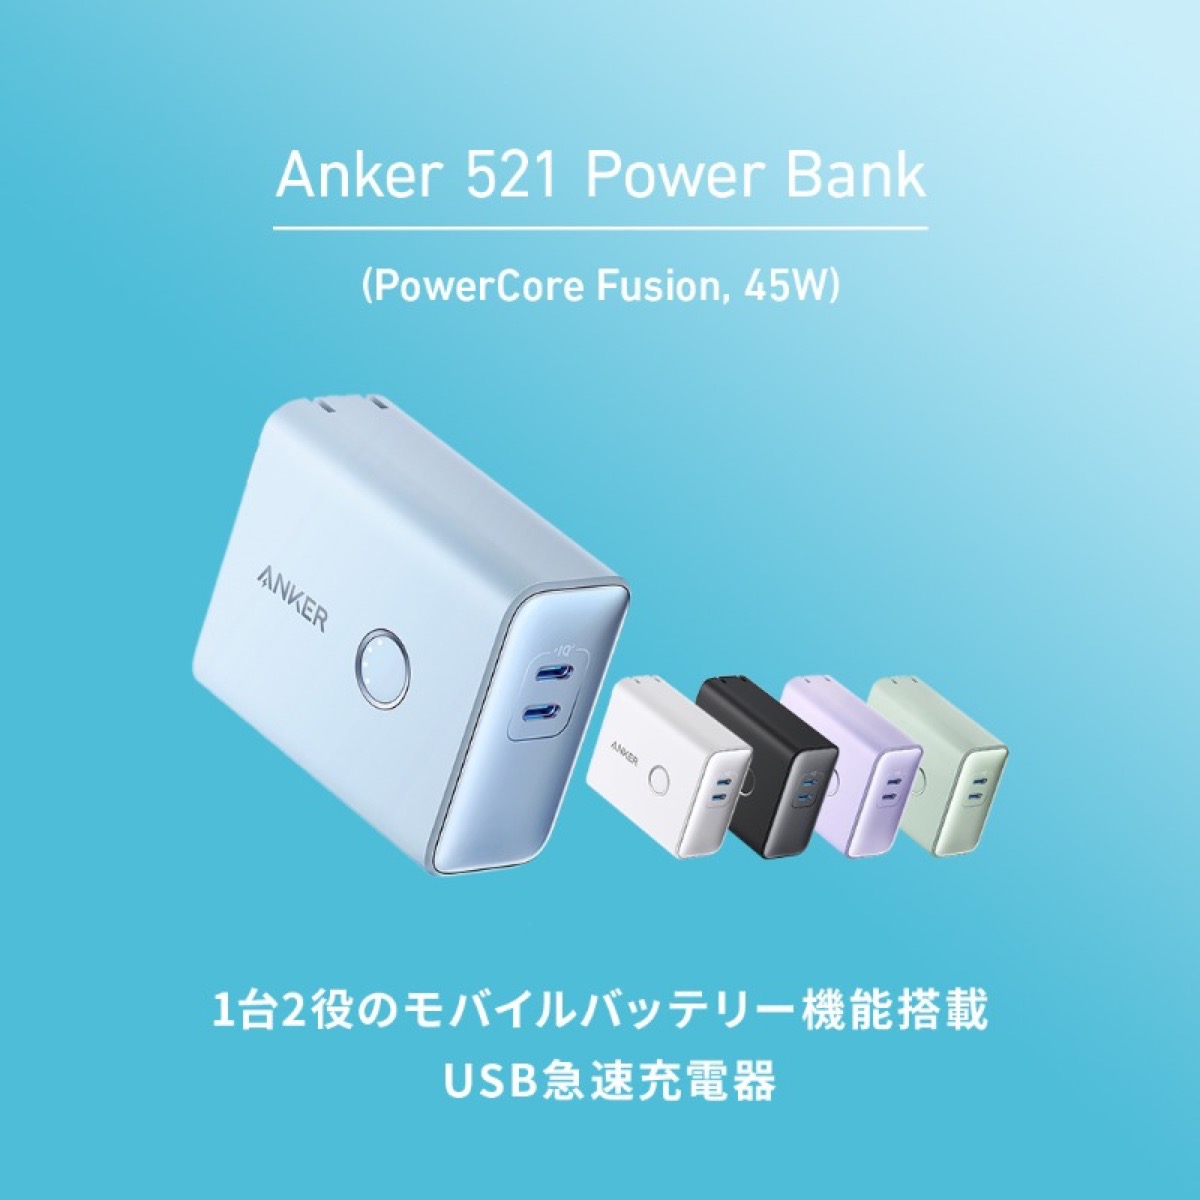 Anker 521 Power Bankに新色ブルー追加〜限定割引中 - iPhone Mania